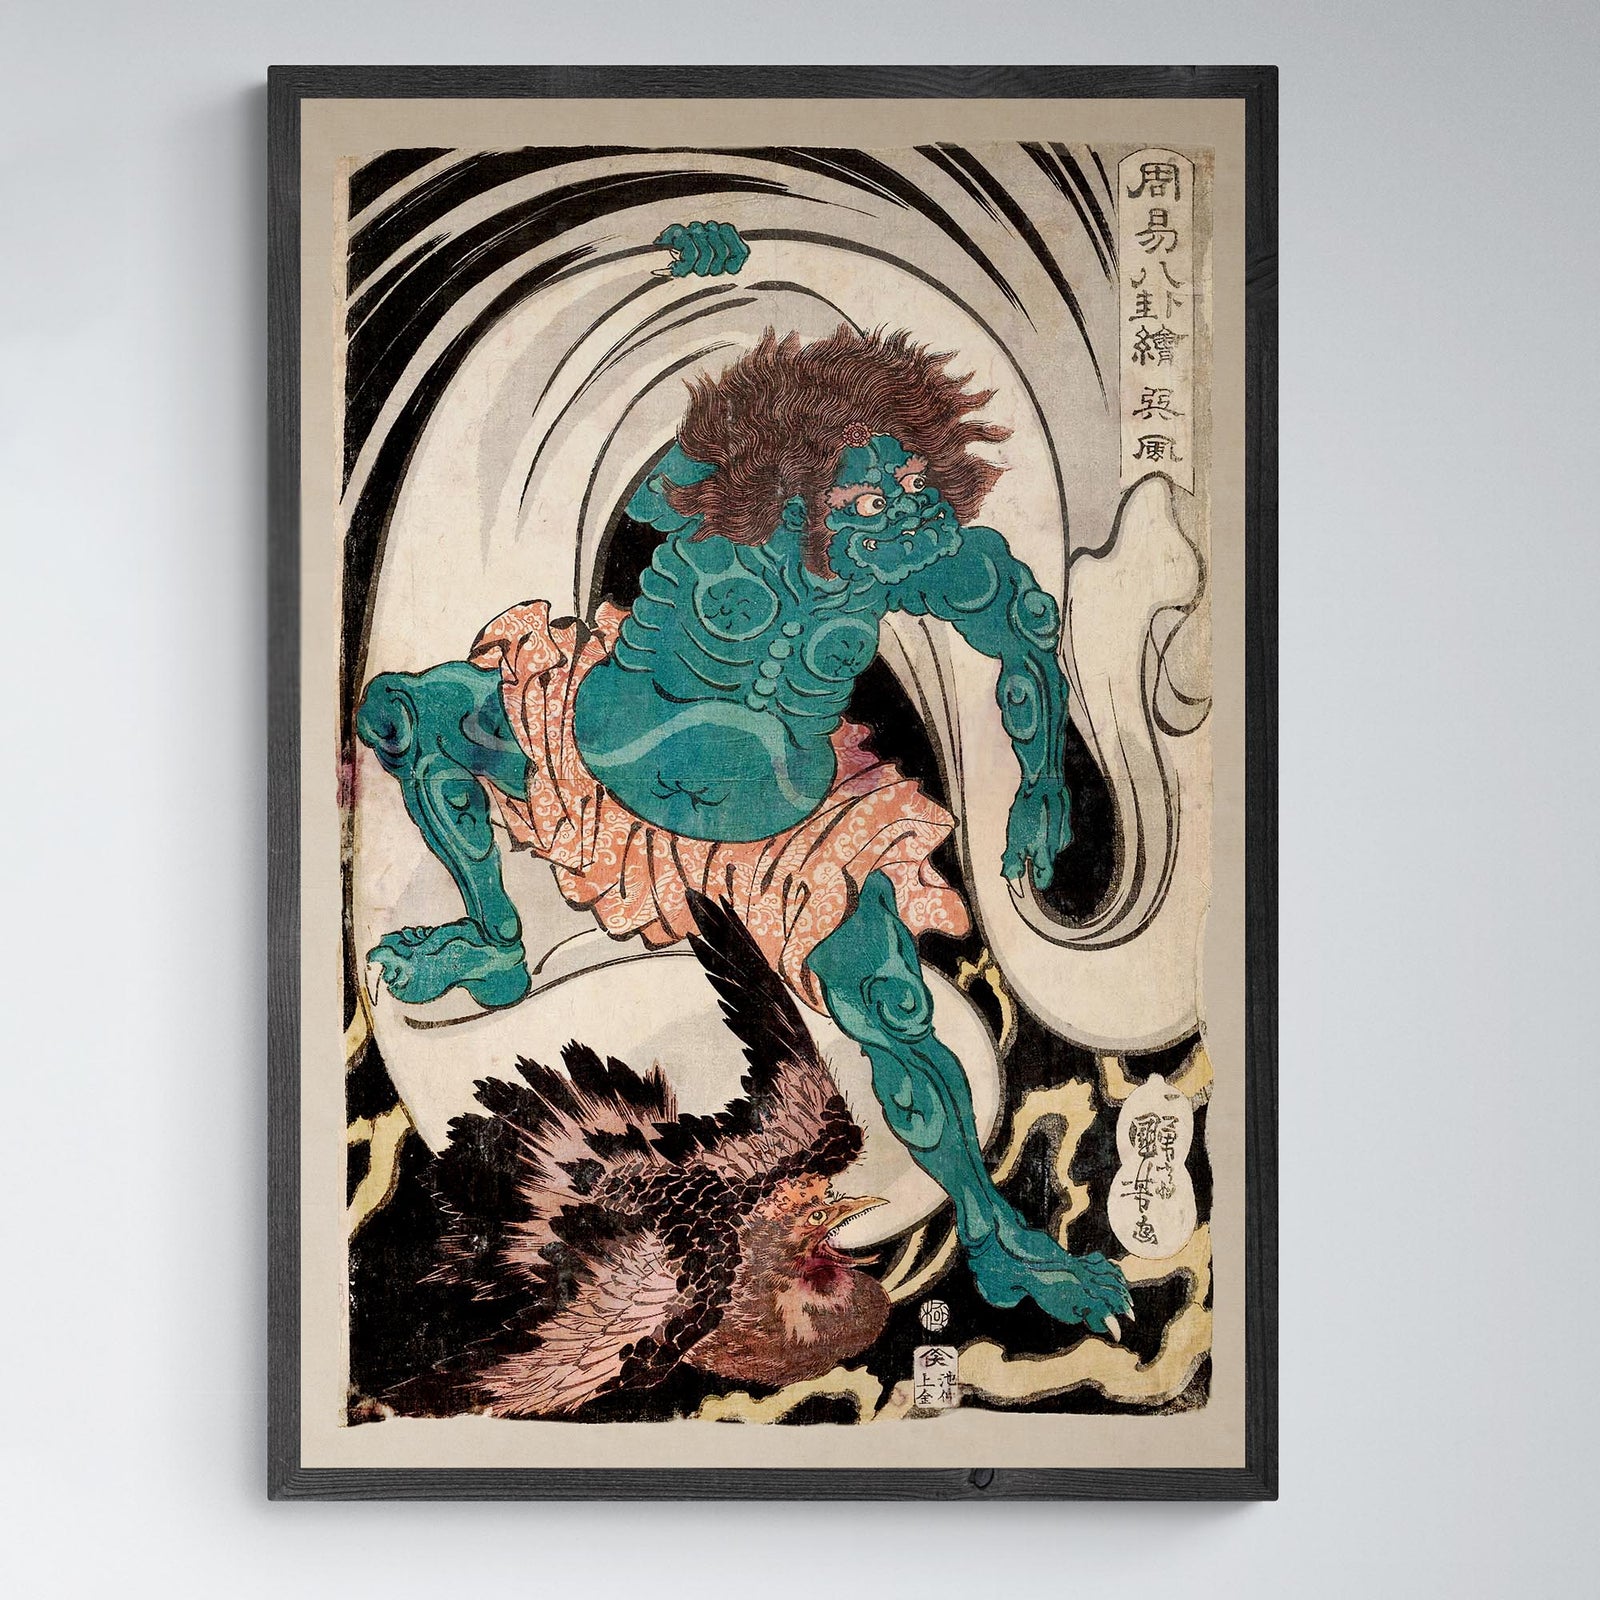 giclee 4"x6" The Trigram Xun or Wind by Utagawa Kuniyoshi Japanese Kawaii Supernatural Occult Yokai Ukiyo-e Woodblock Vintage Fine Art Print